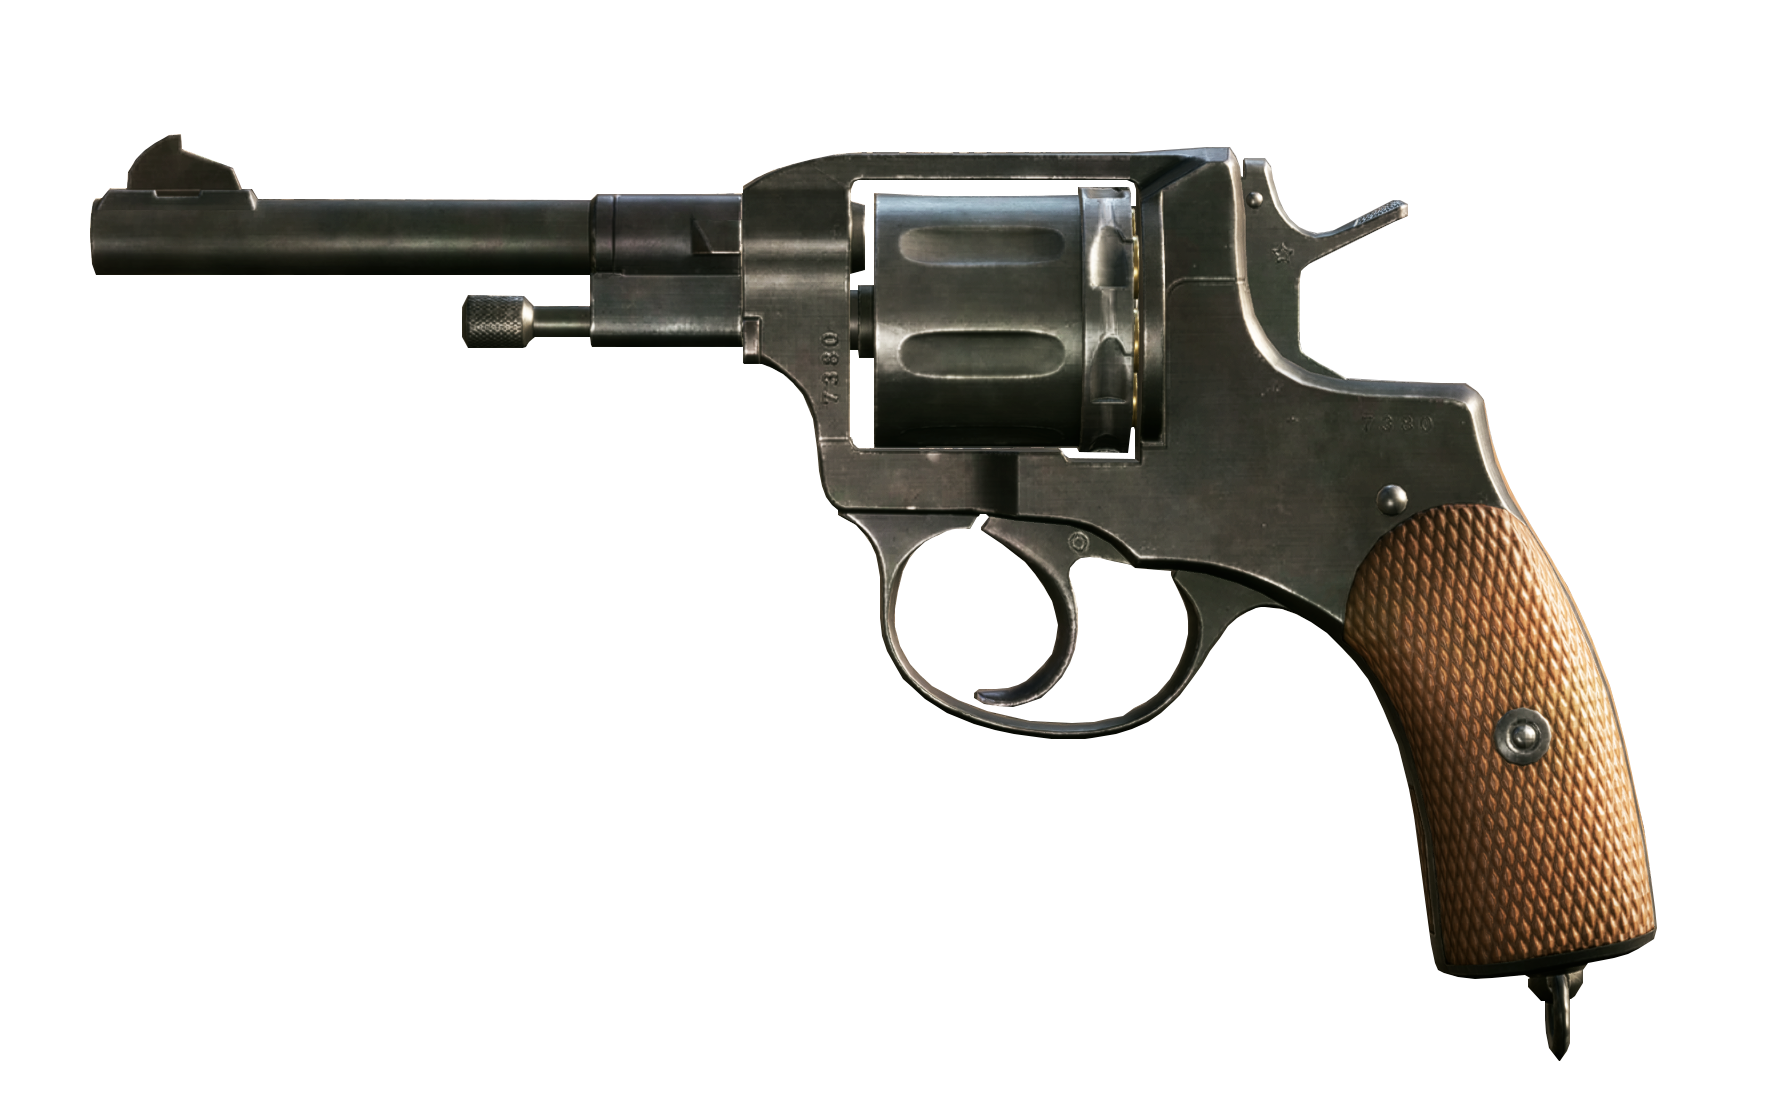 Nagant Revolver | Battlefield Wiki | FANDOM powered by Wikia